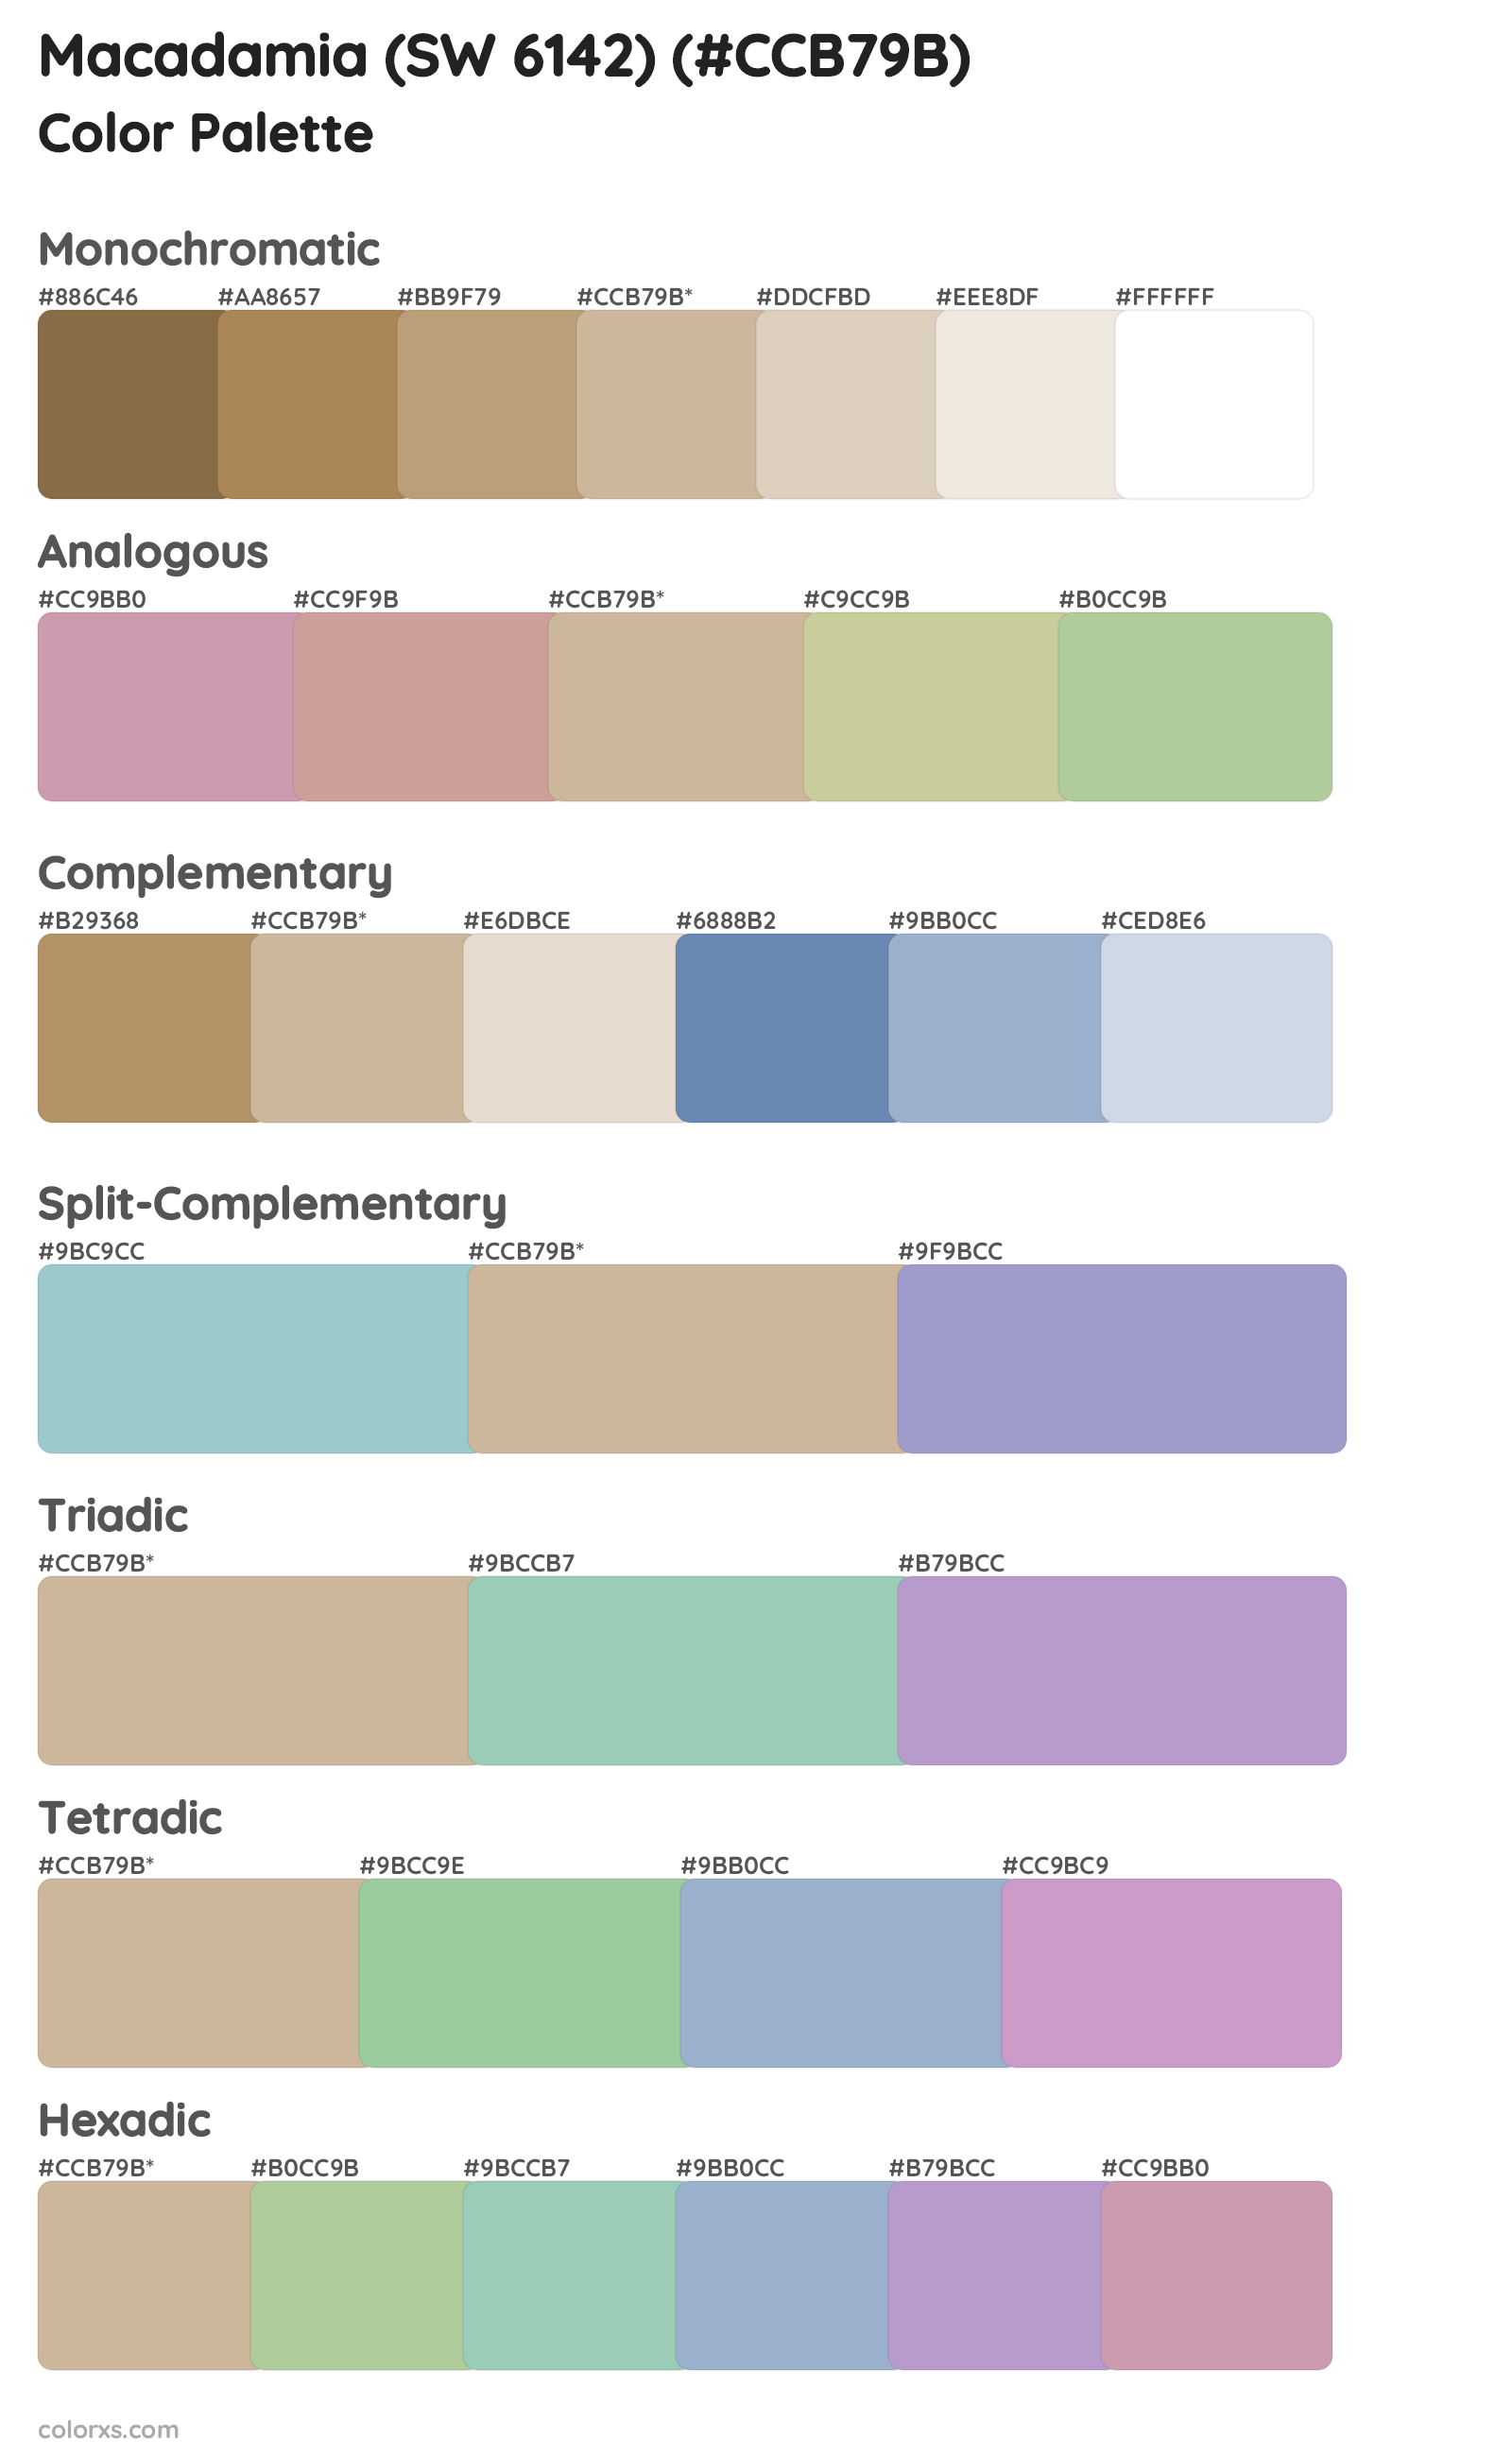 Macadamia (SW 6142) Color Scheme Palettes